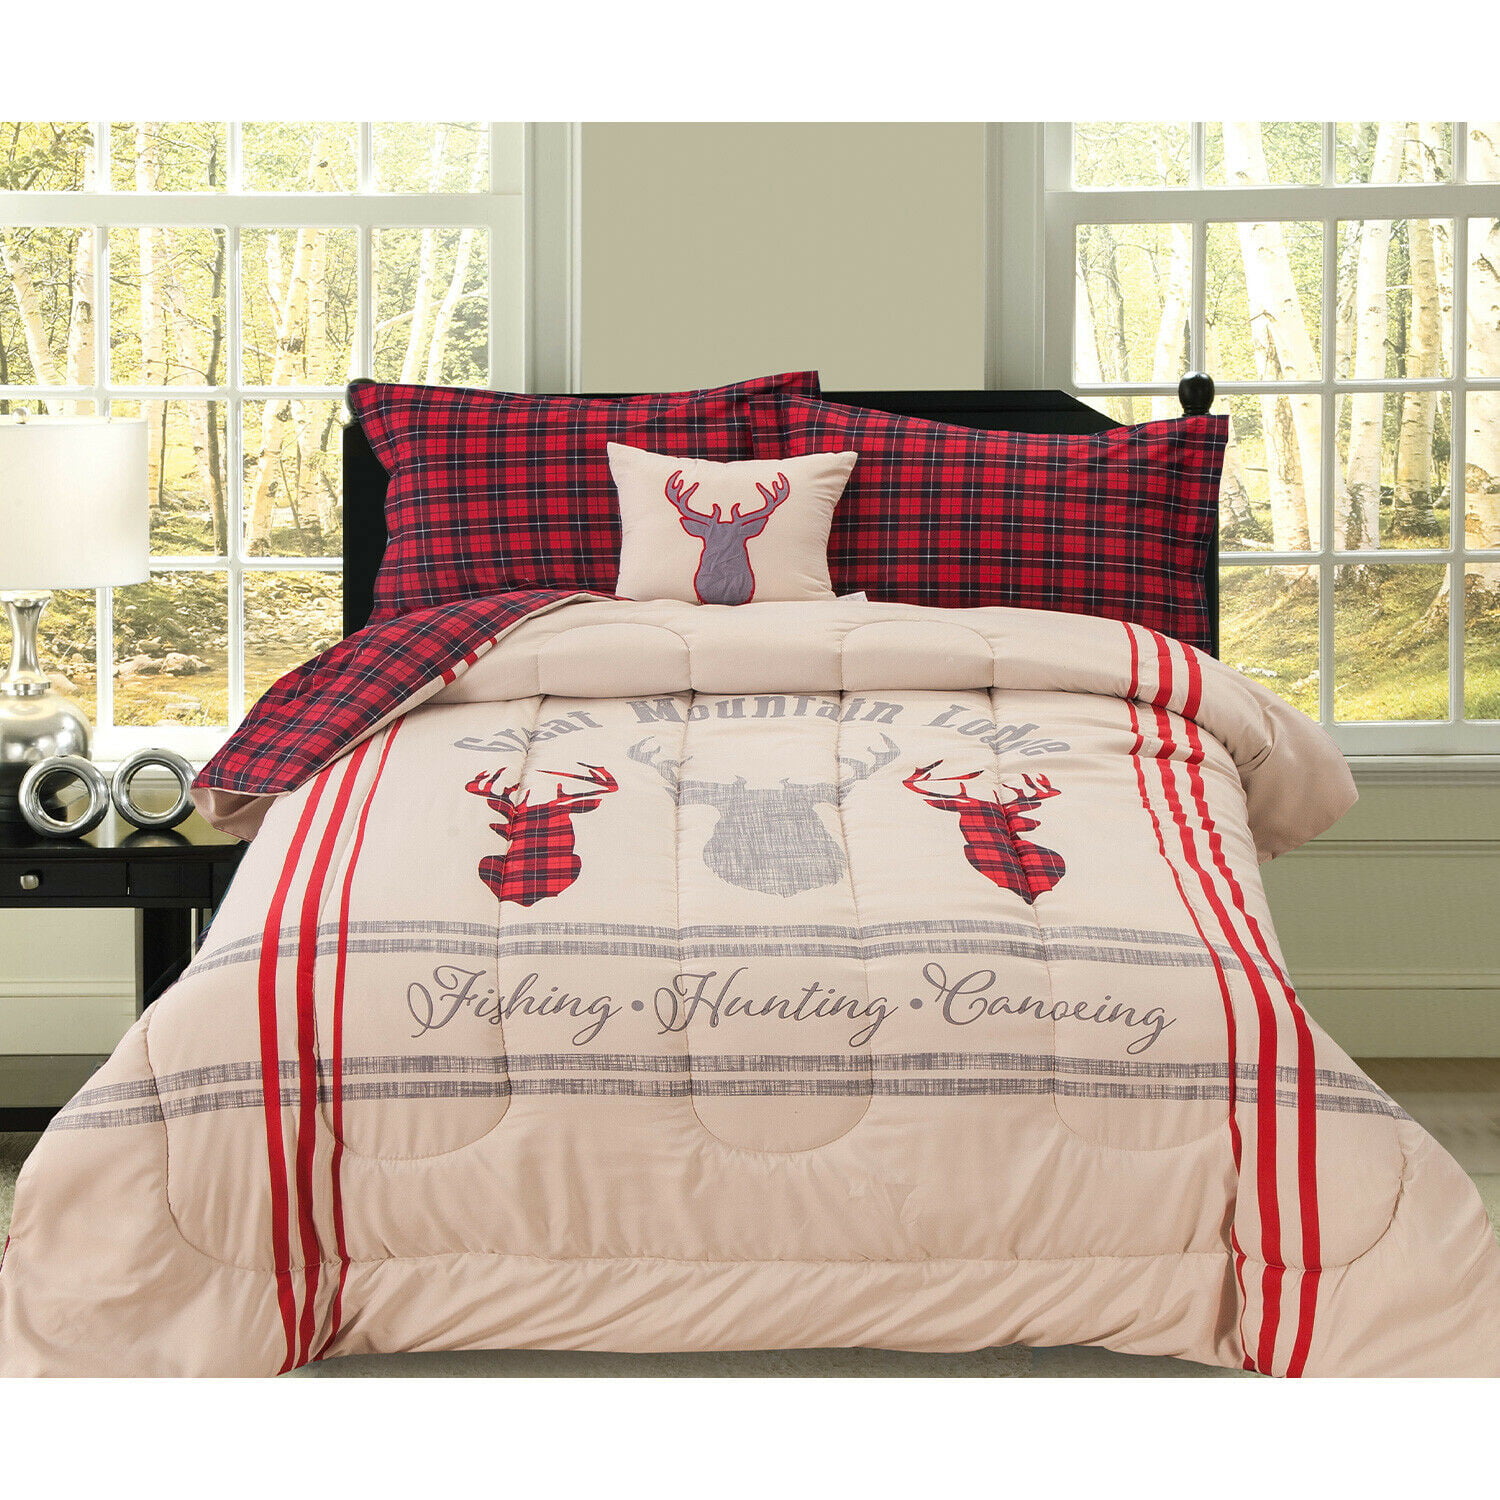 King Western Peak 3 Pcs Star Patterned Luxury Quilt Bedspread Comforter Red